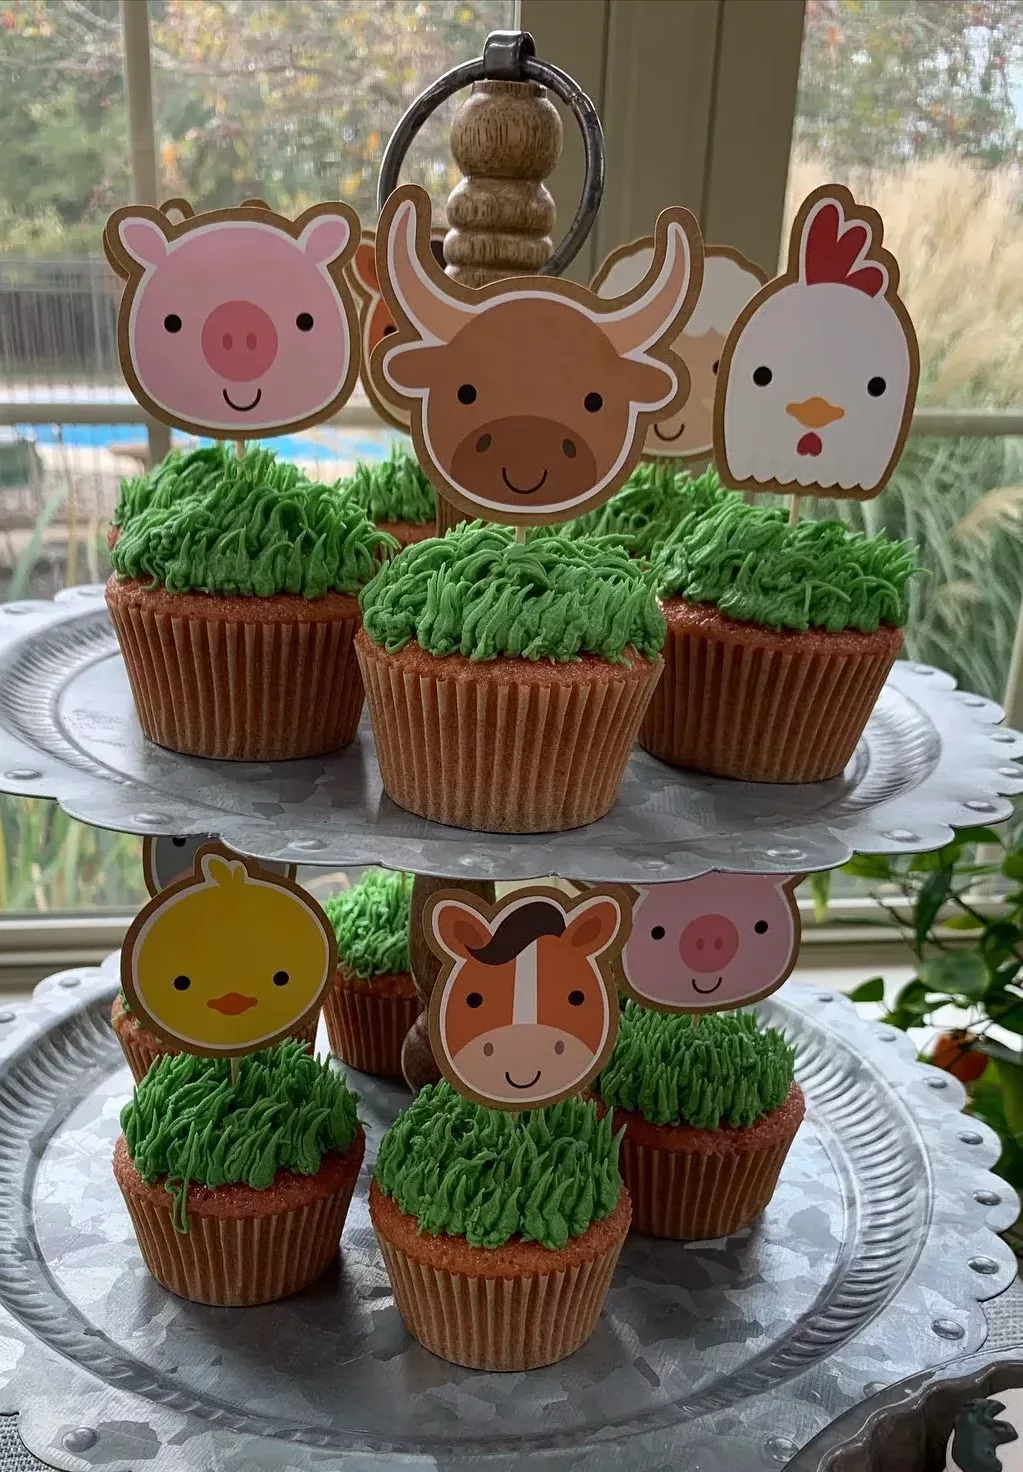 chick, horse, chicken, and pig barnyard animal face cutout cupcakes